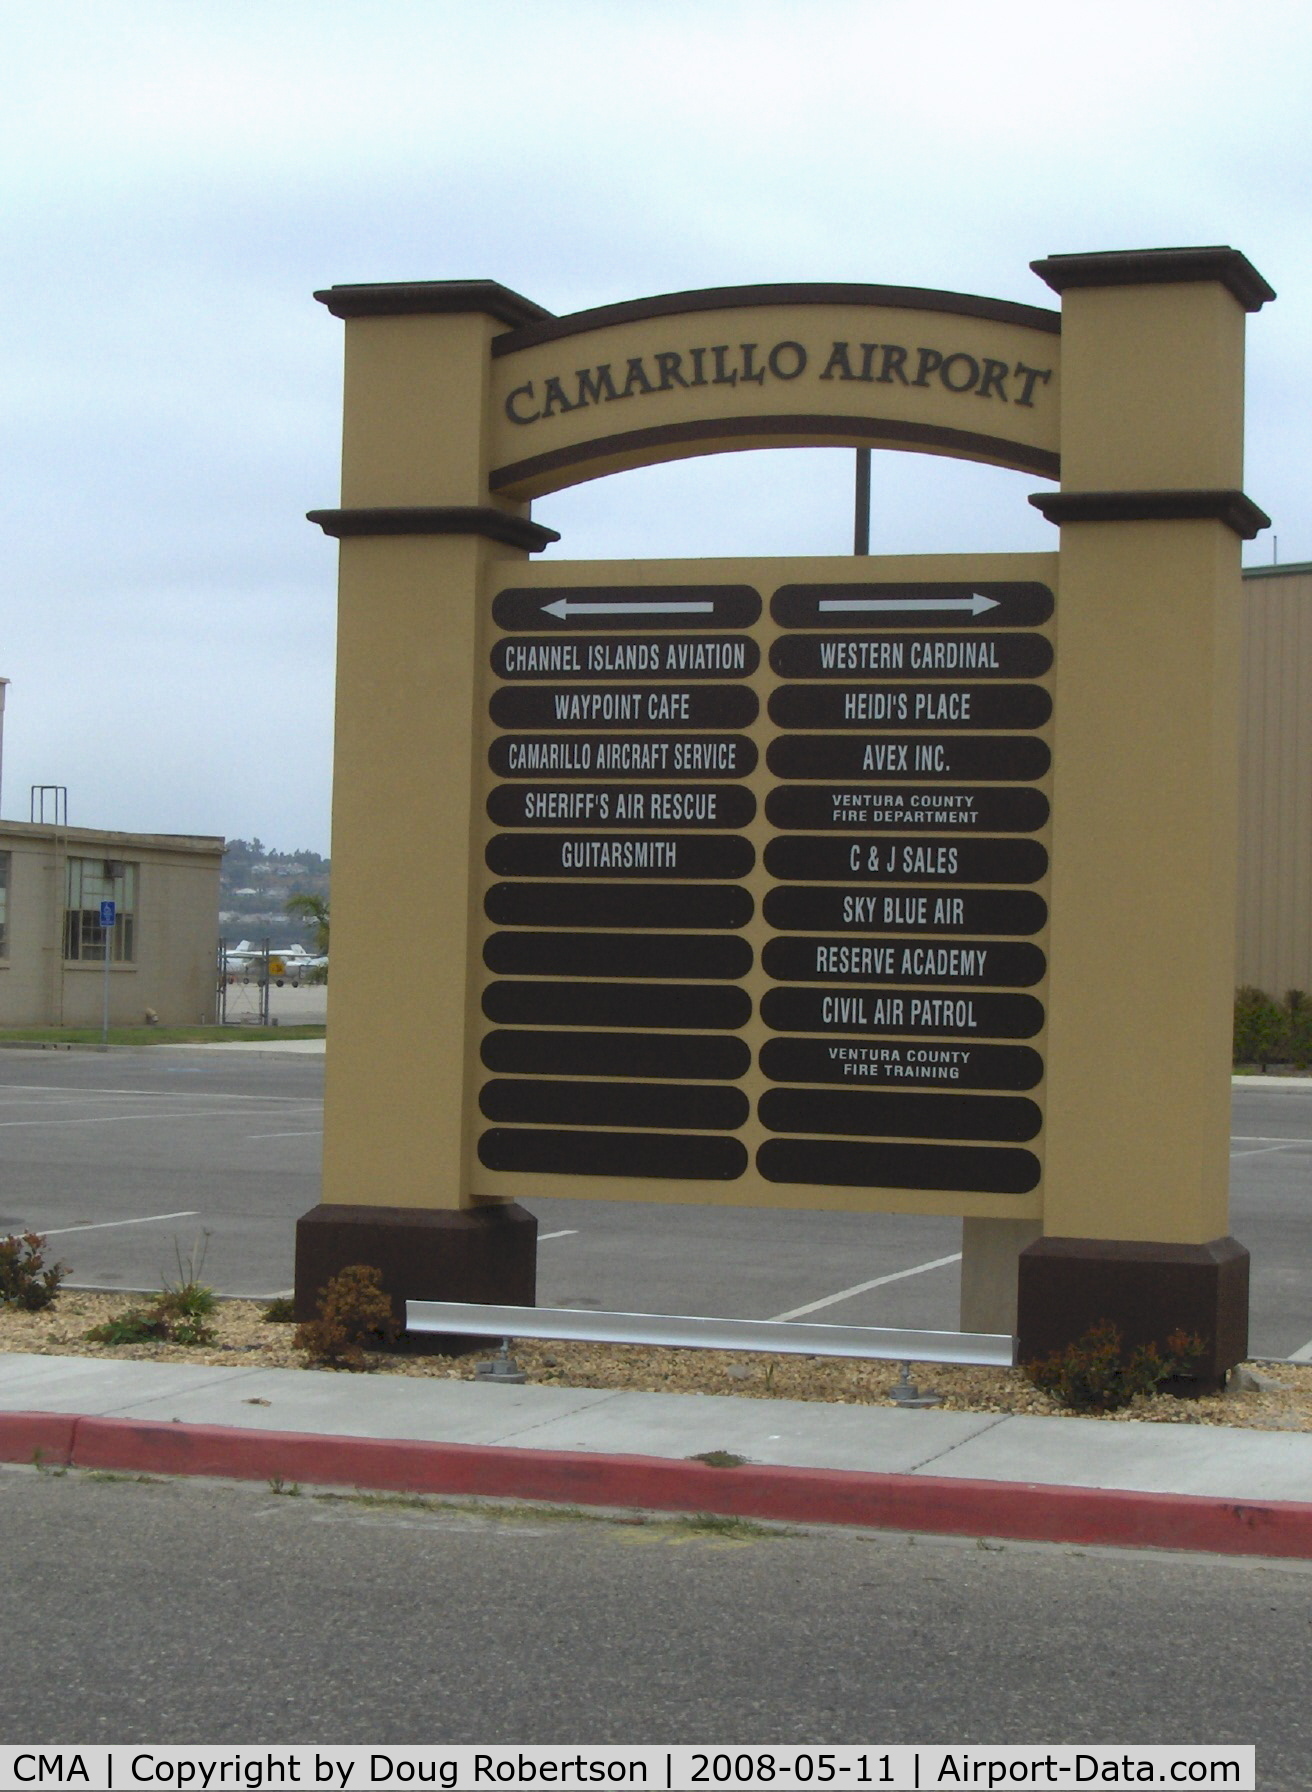 Camarillo Airport (CMA) - Camarillo Airport